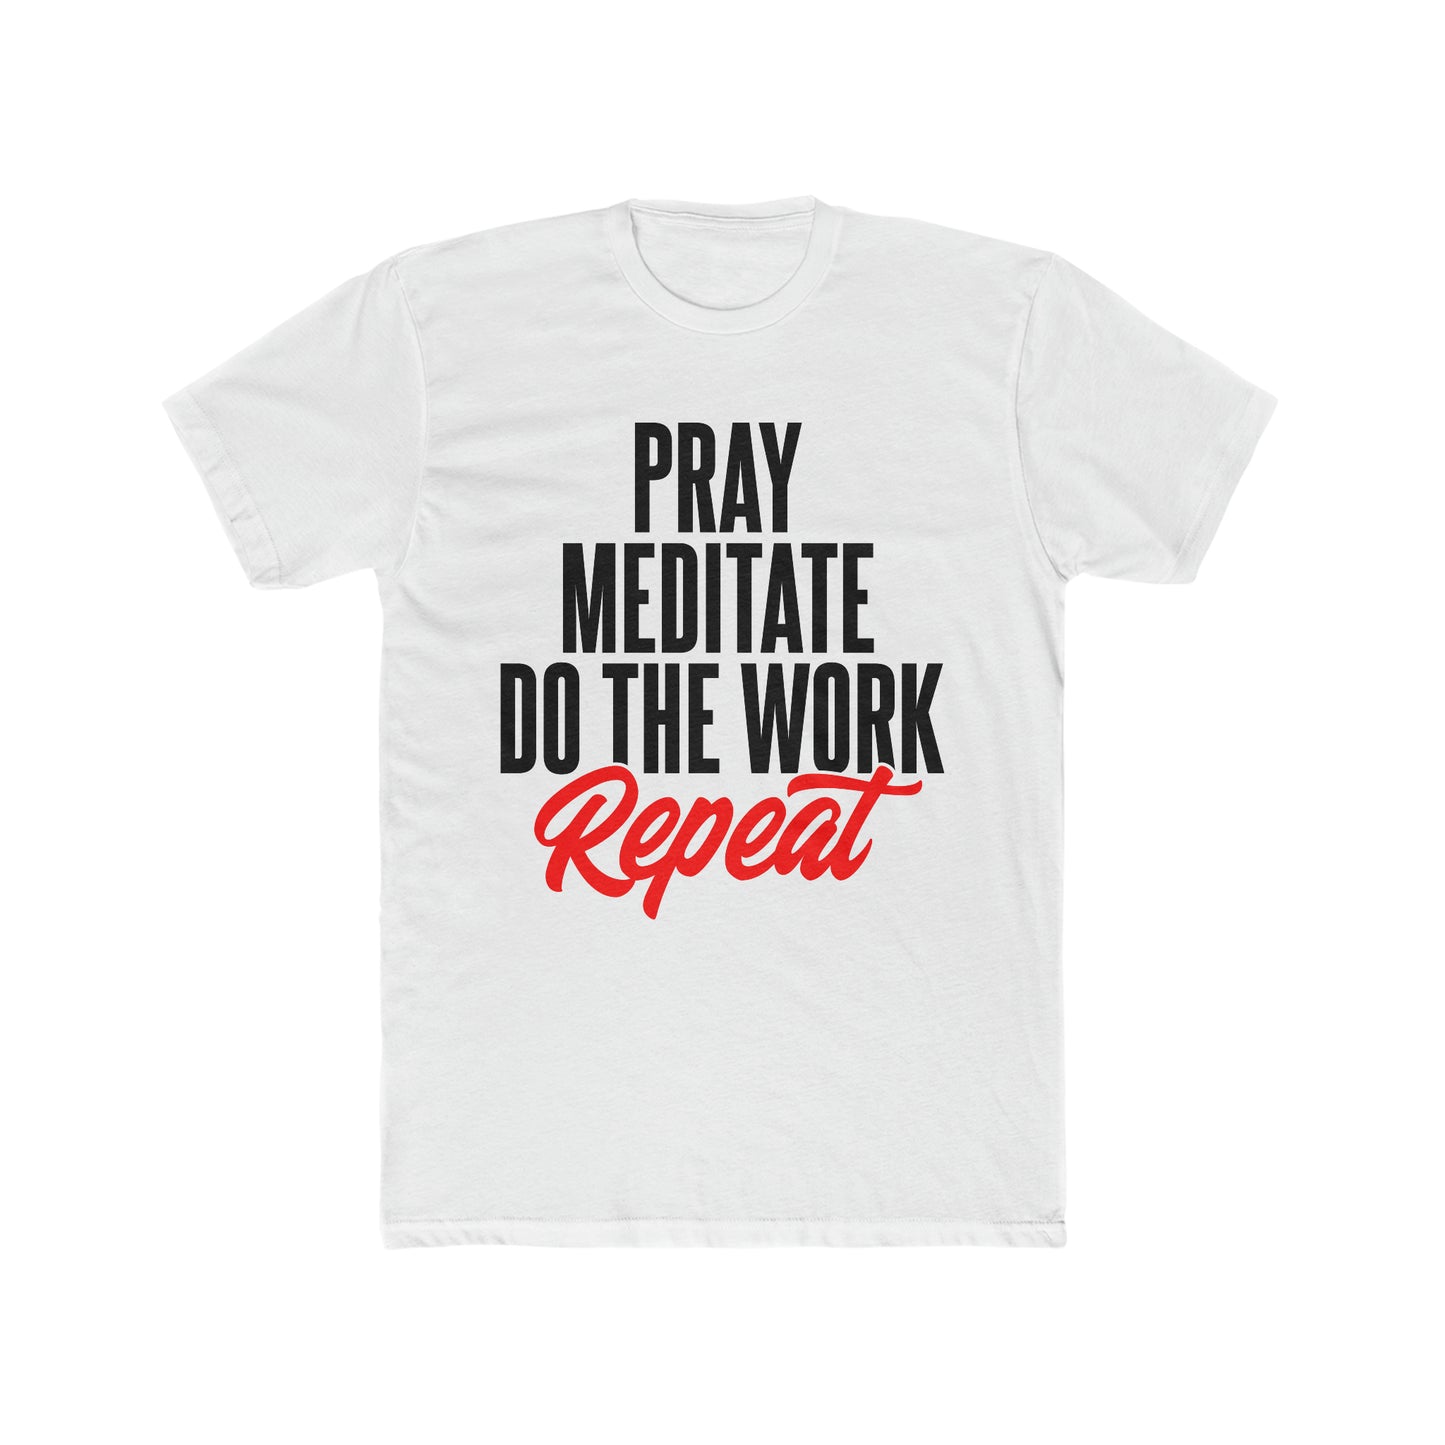 "Pray, Meditate, Do The Work" tee